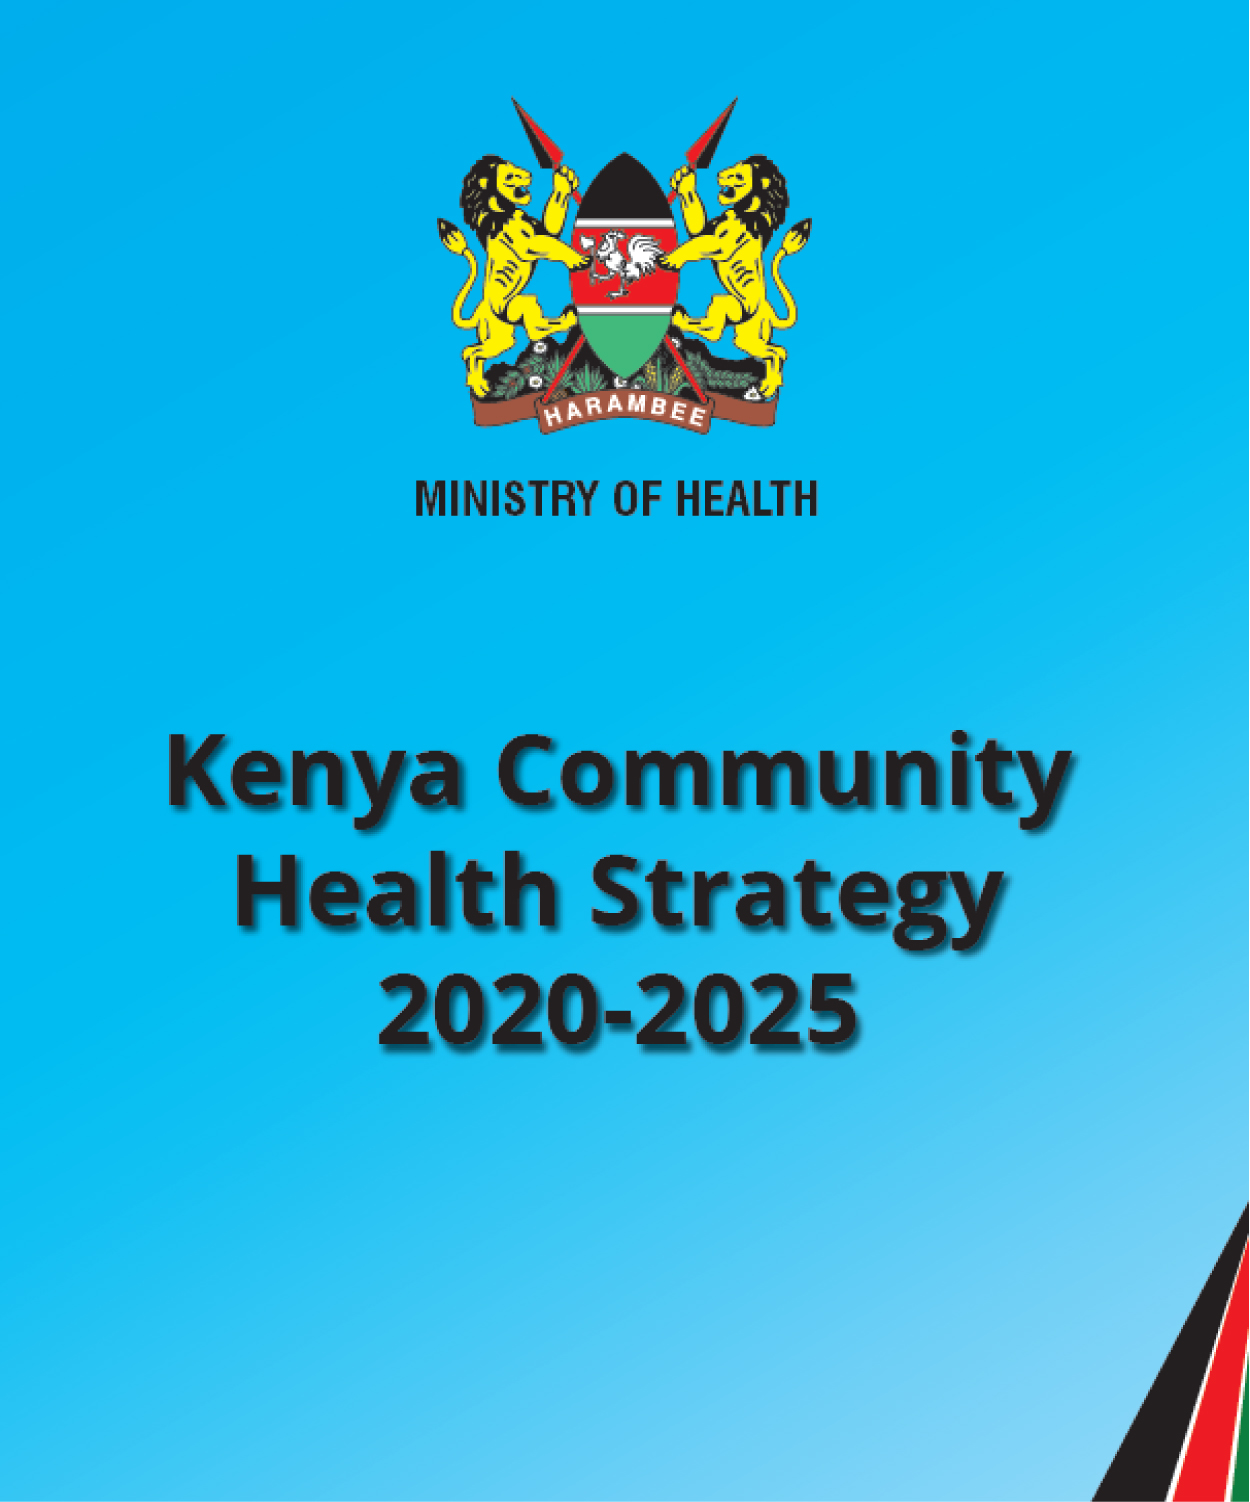 Kenya National Community Health Strategy 2020-2025